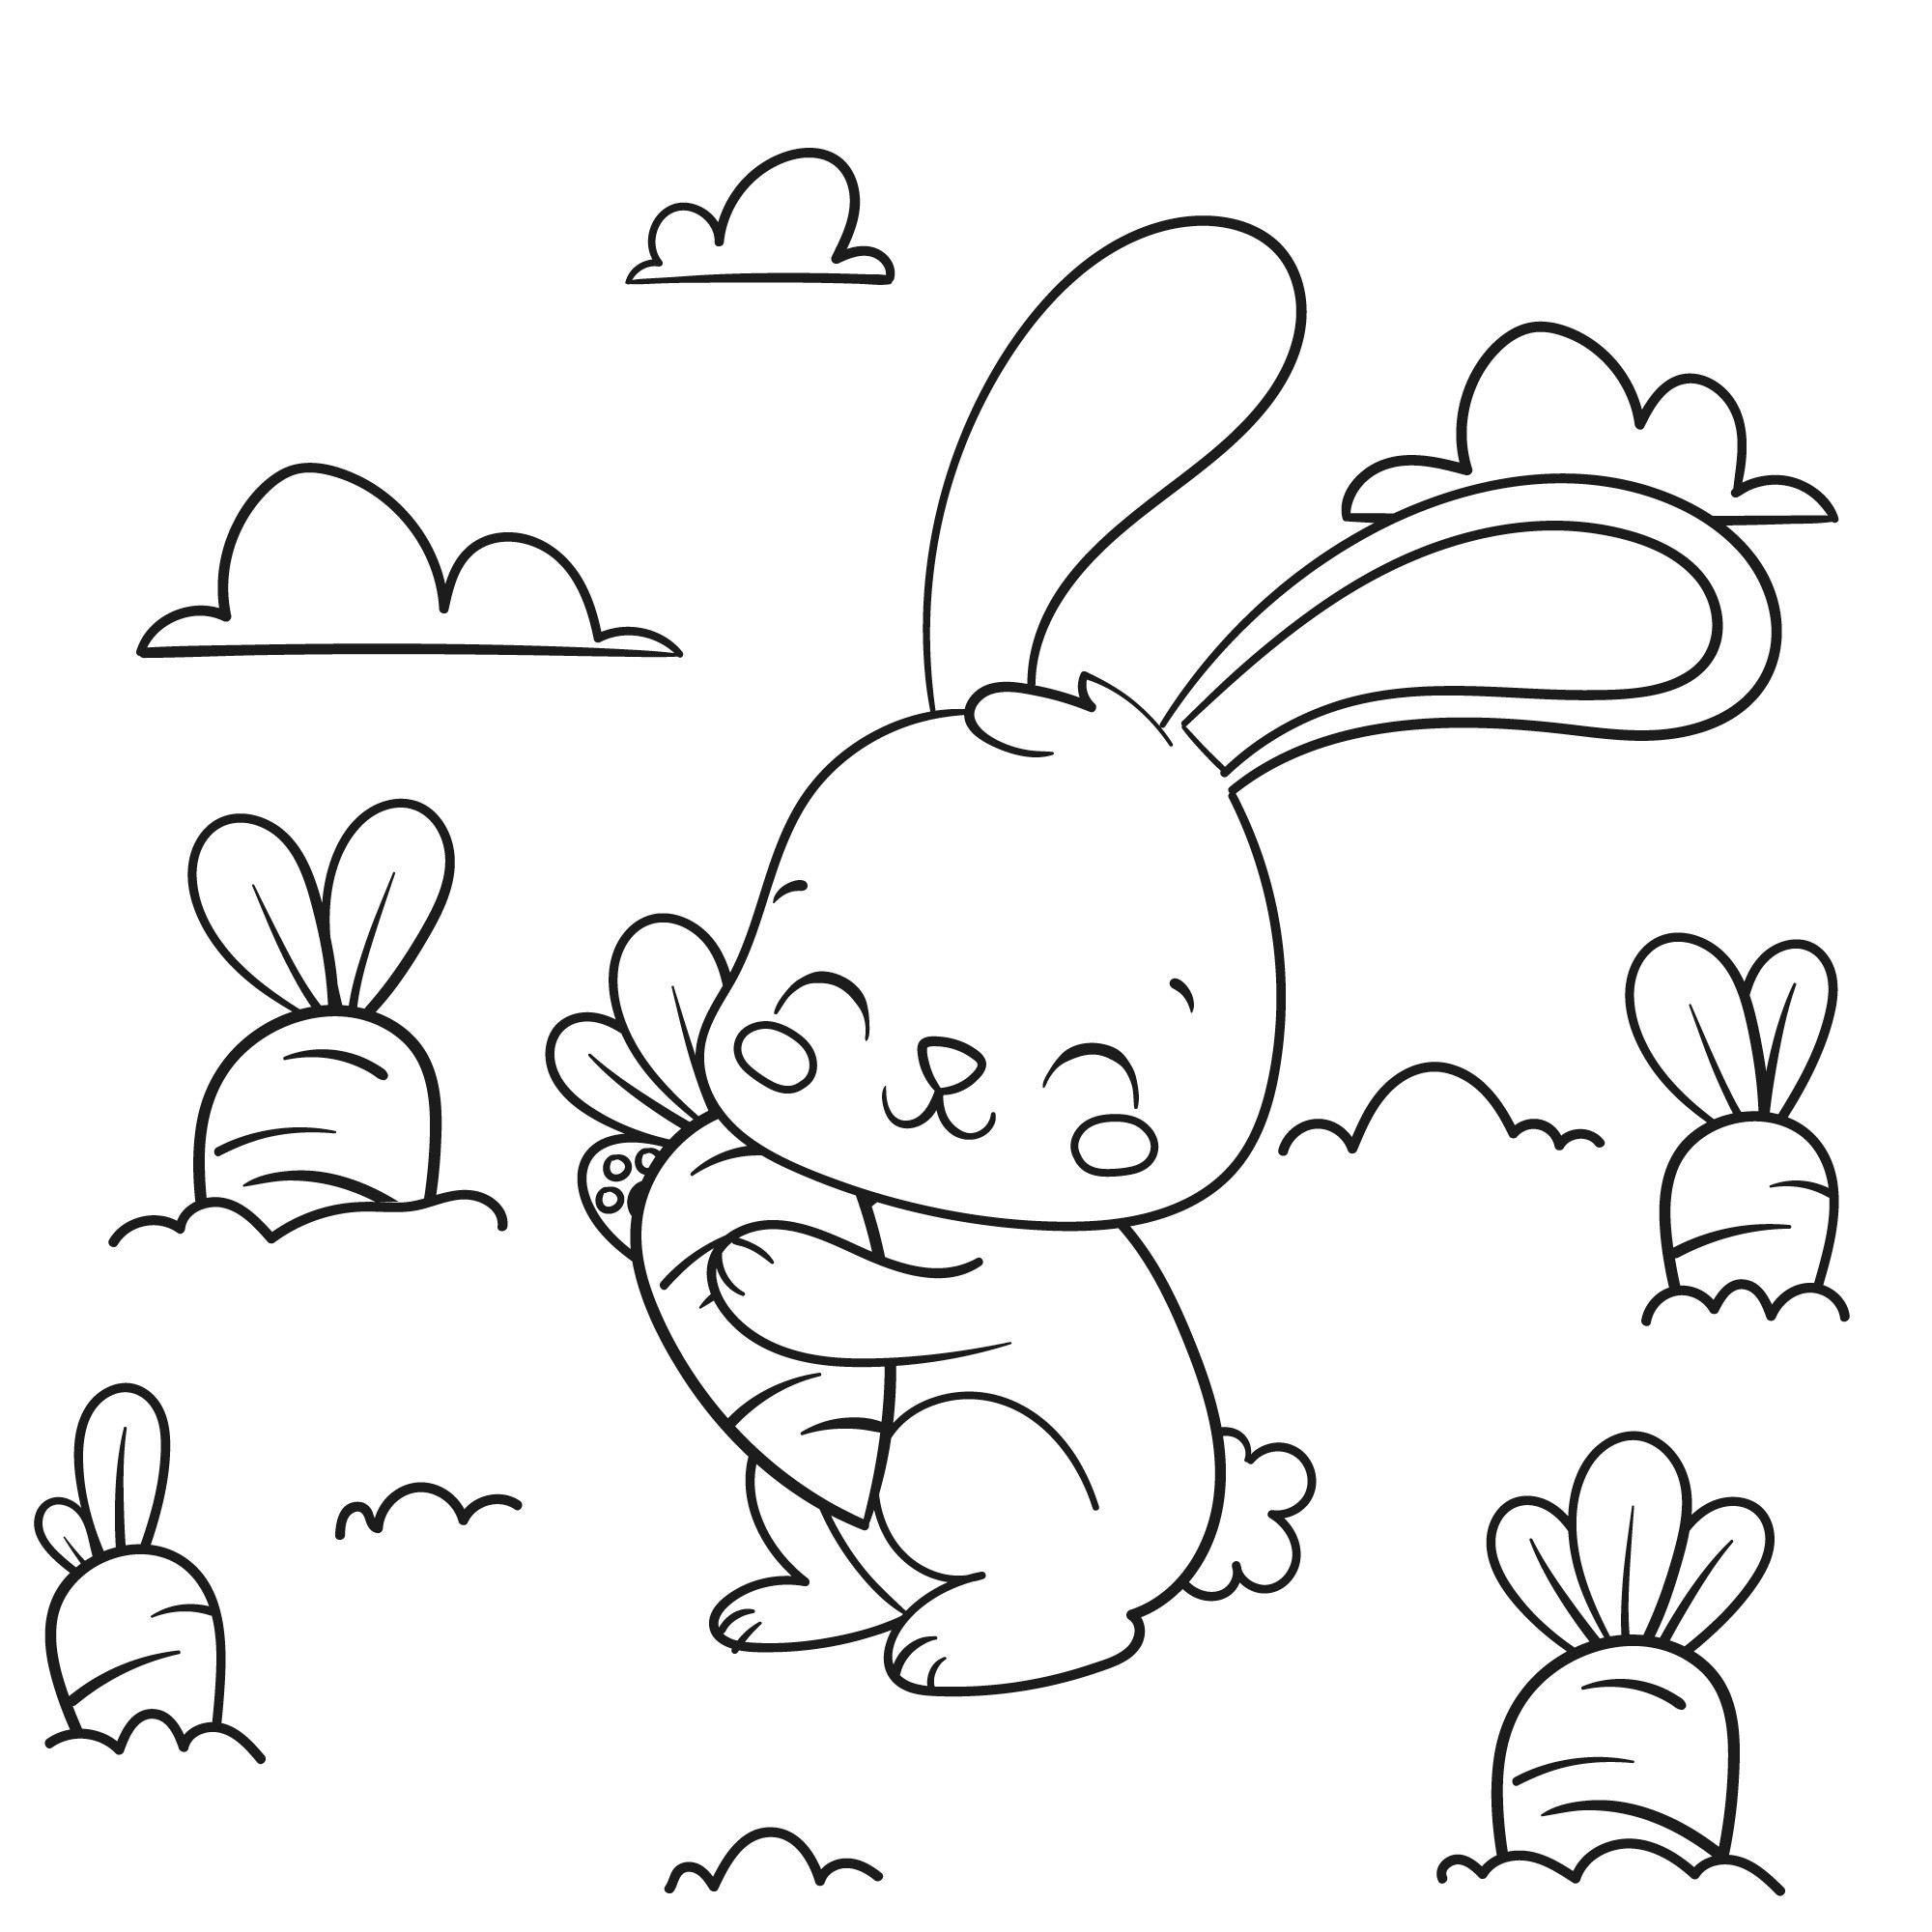 Раскраска для детей: заяц обнимает морковку